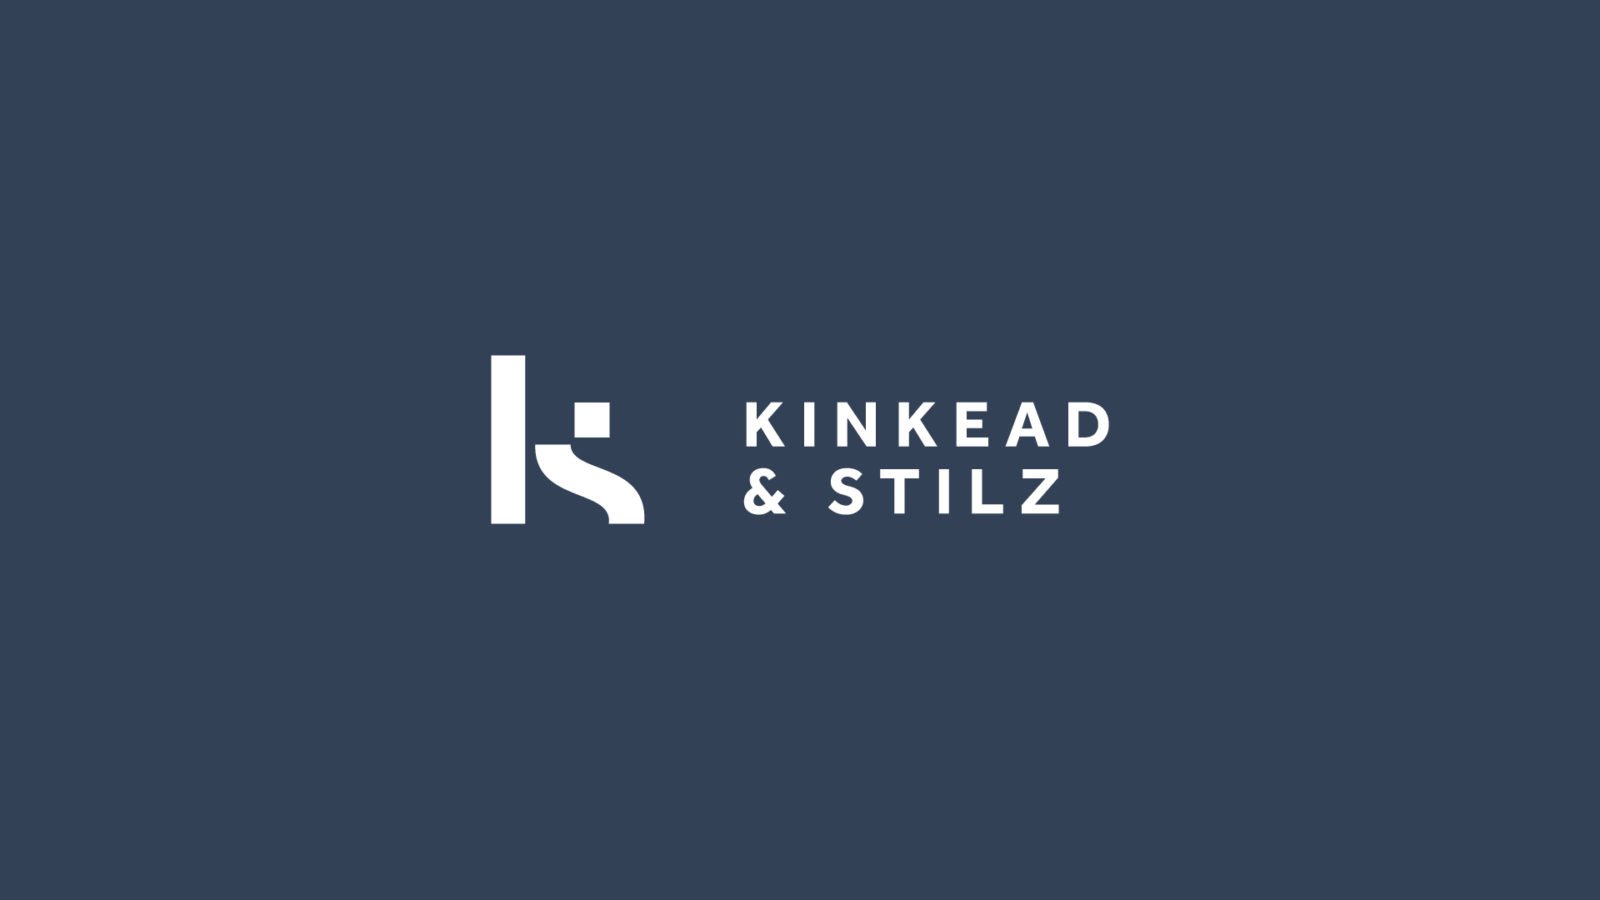 Kinkead & Stilz